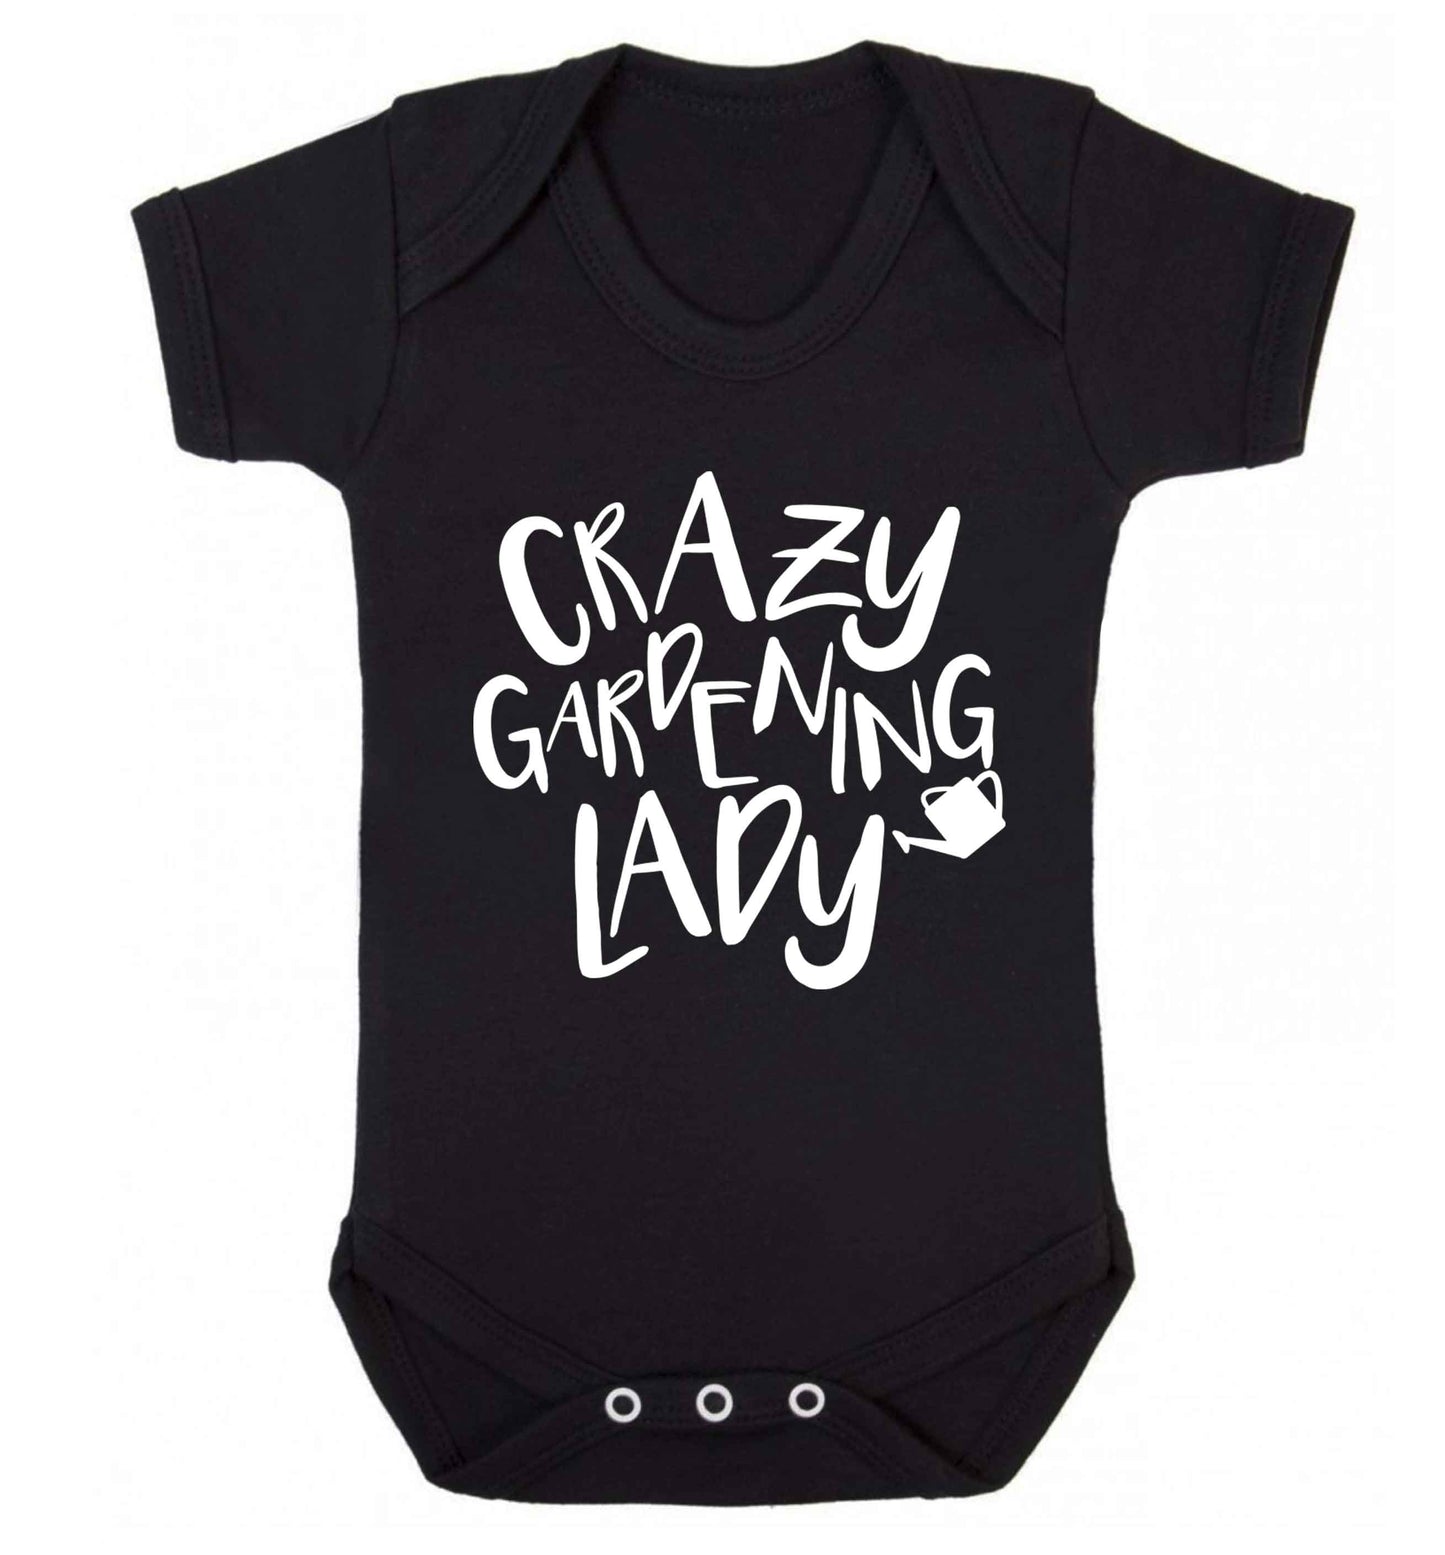 Crazy gardening lady Baby Vest black 18-24 months